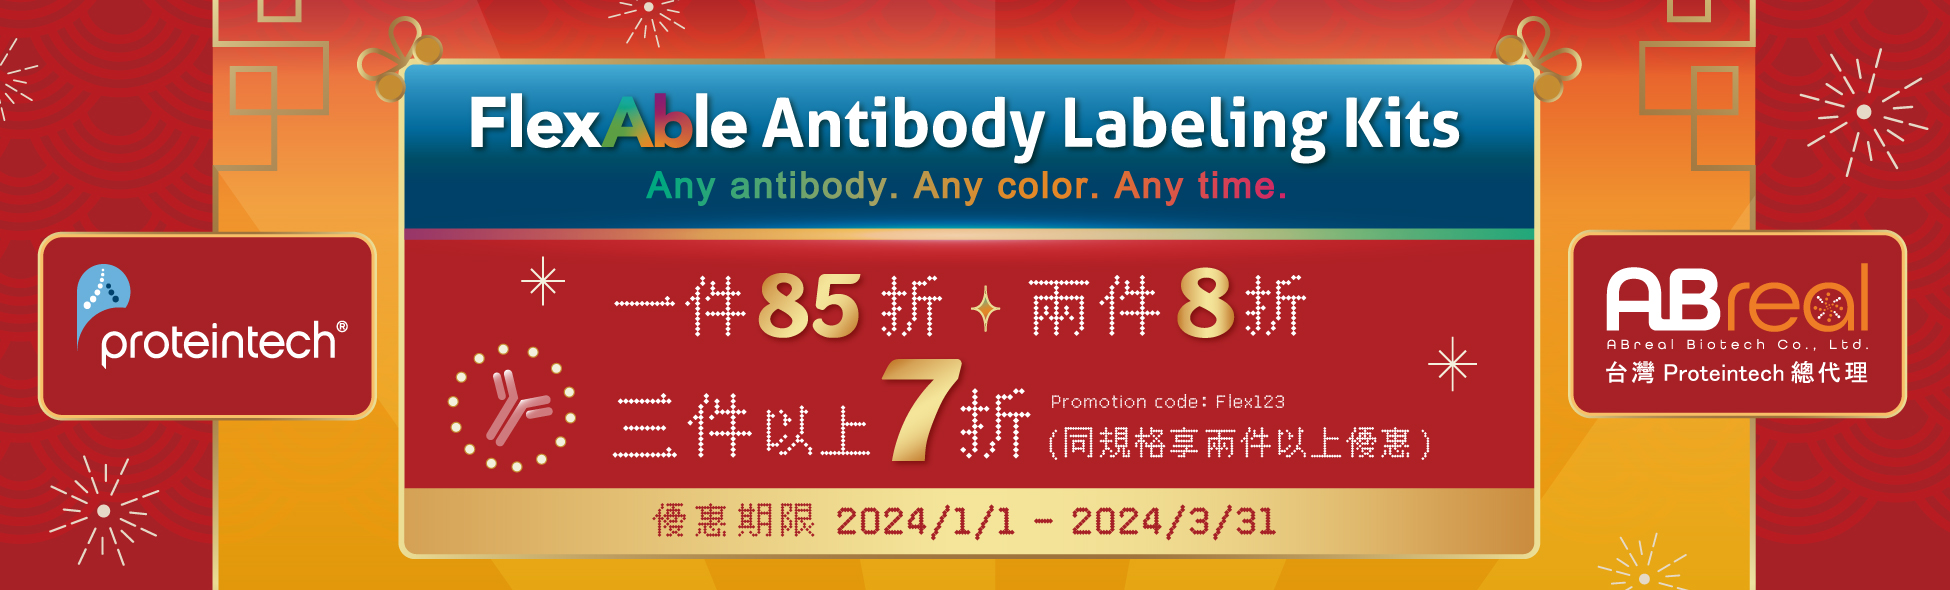 【Proteintech】FlexAble Antibody Labeling Kits  多件促銷優惠